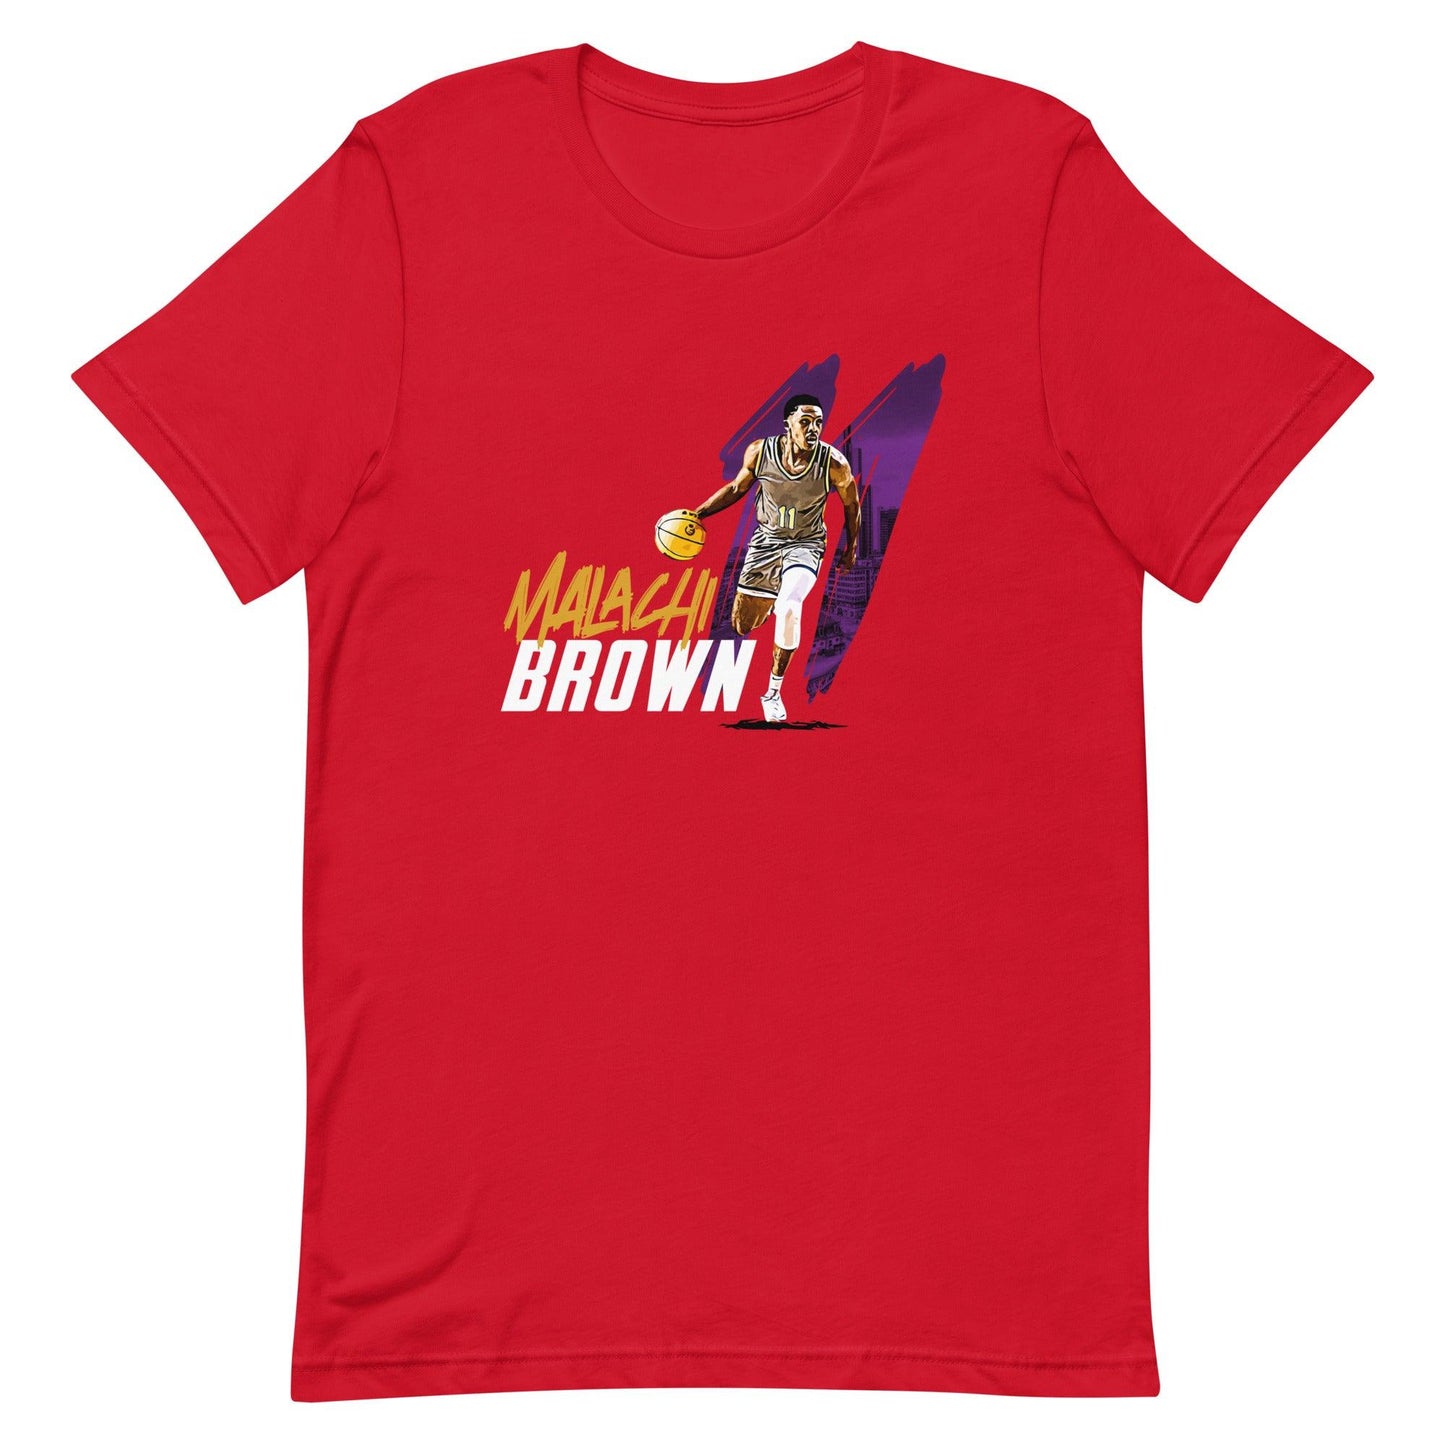 Malachi Brown "Jersey" t-shirt - Fan Arch